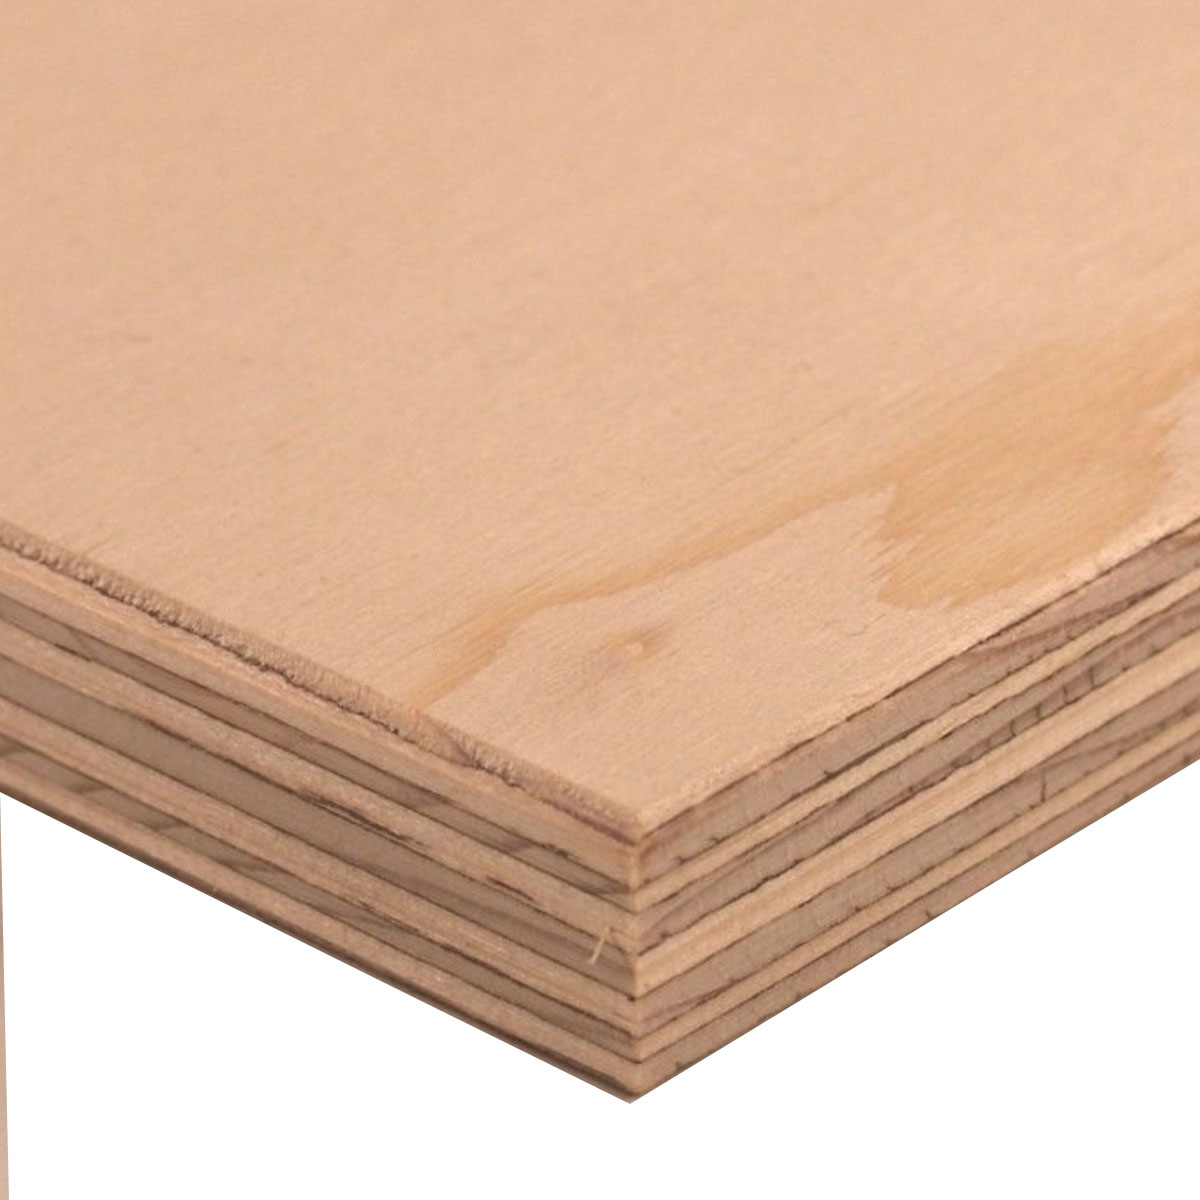 Standard Fir Plywood - TG - 4 x 8 - 15.5 mm - 5/8-in